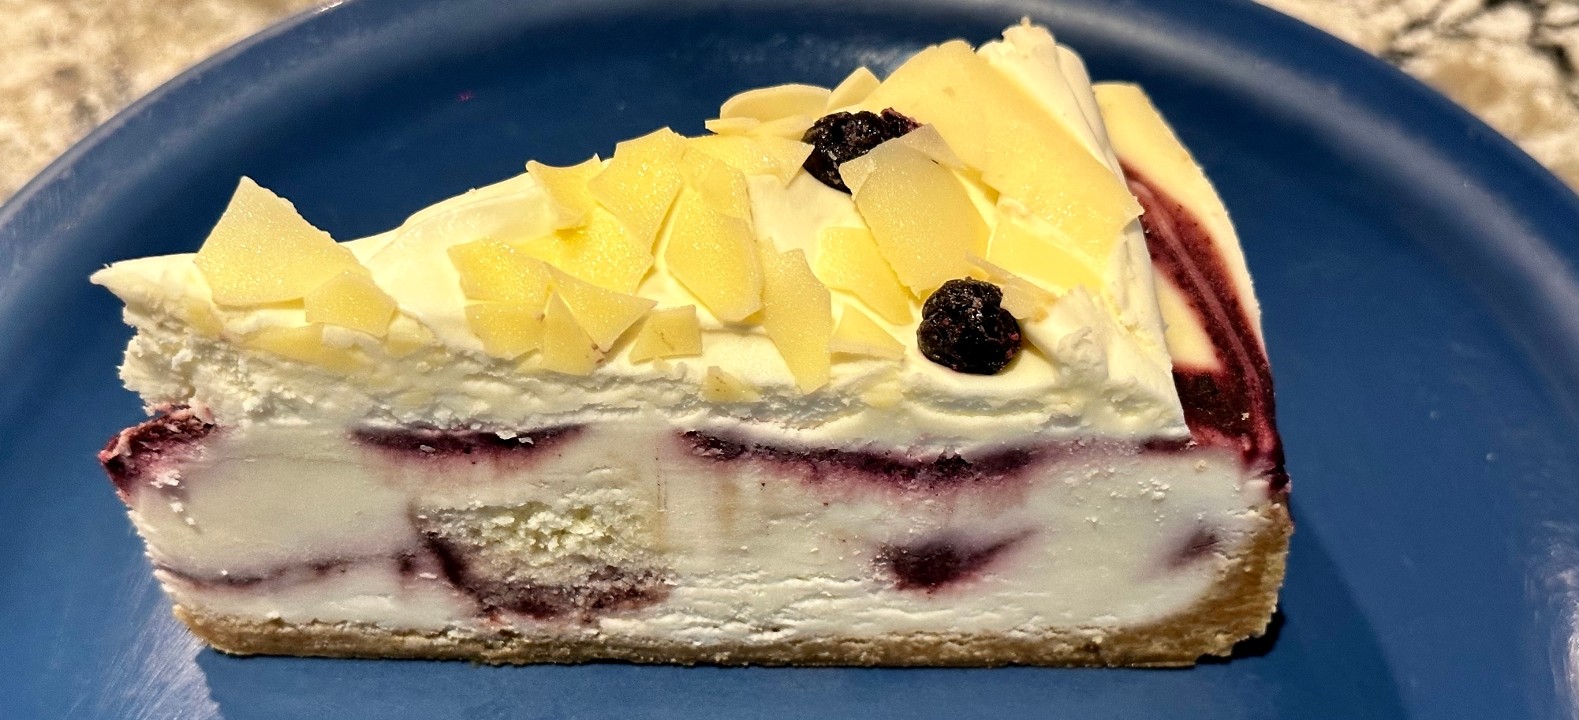 Blueberry cobbler cheesecake